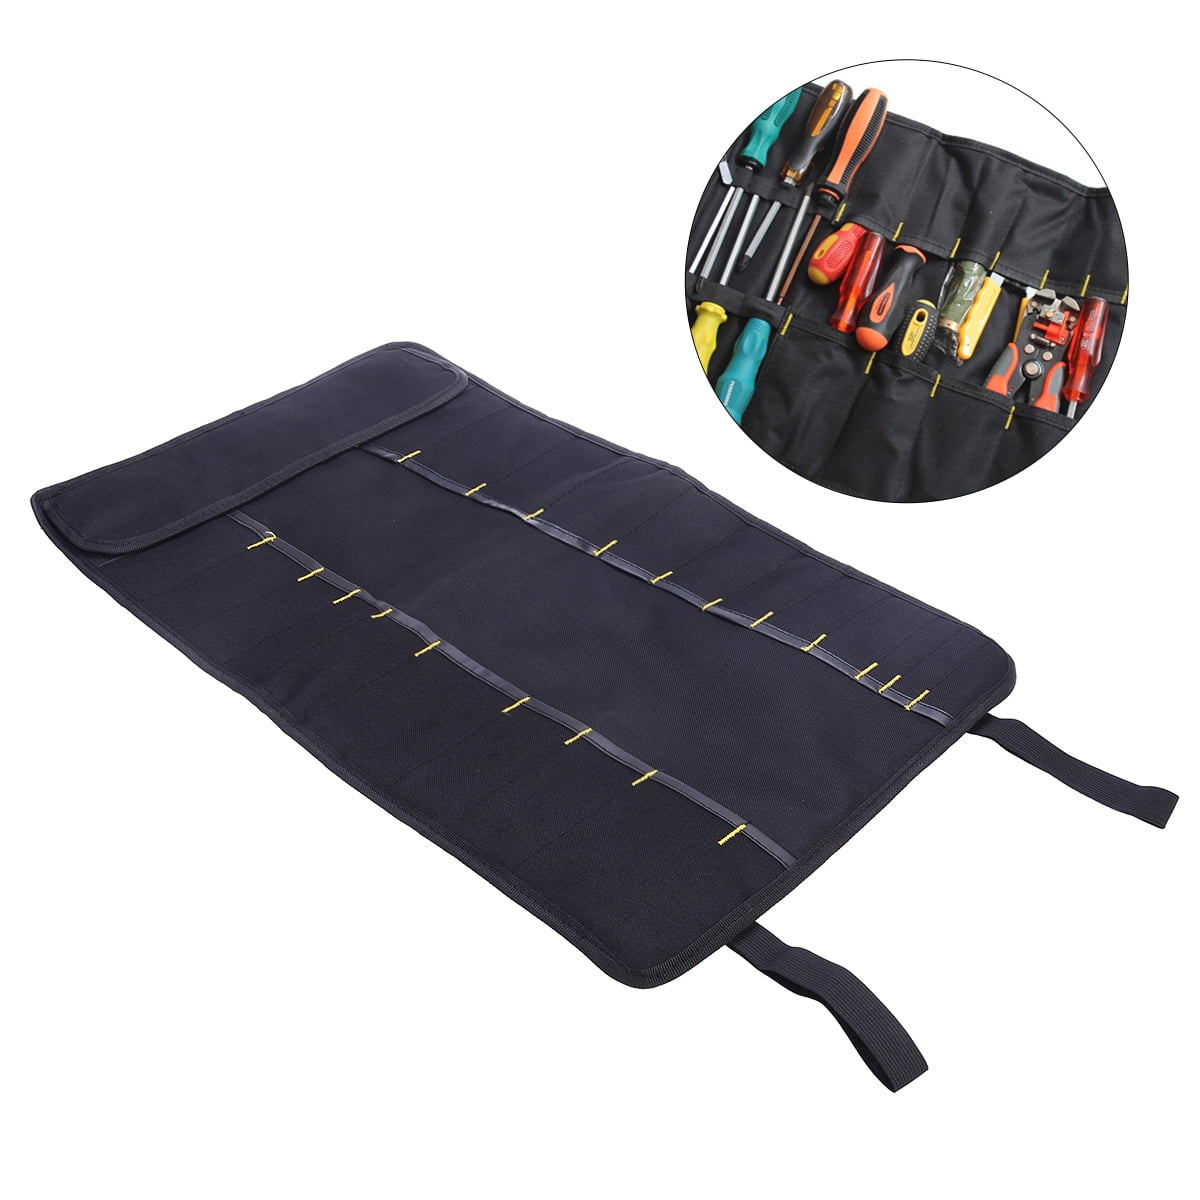 Details about   Blue MultiPurpose Pocket Reel Rolling Repair Tool Bag Plier Case Pouch Organizer 